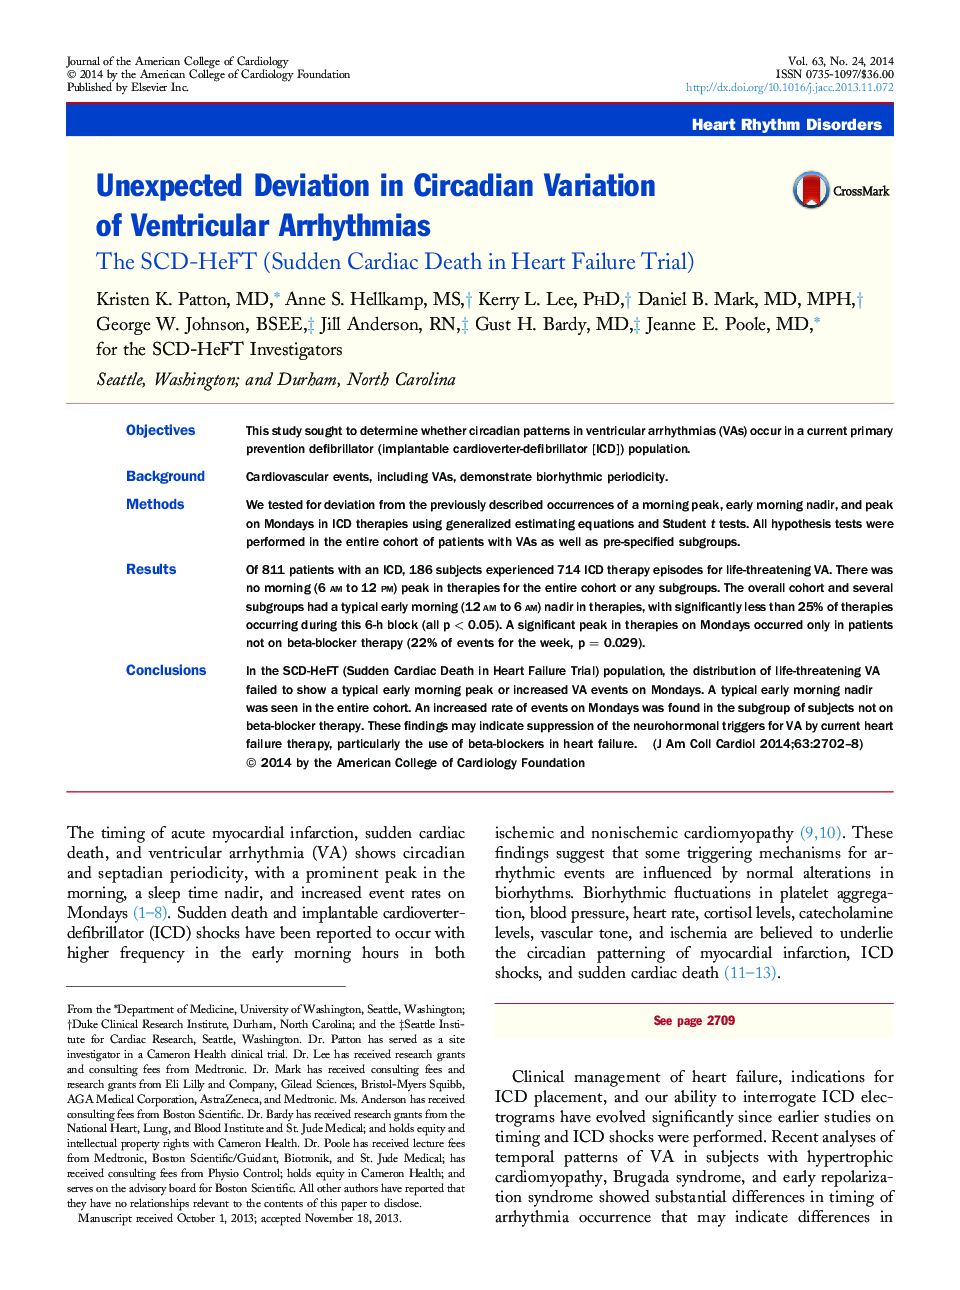 Unexpected Deviation in Circadian Variation of Ventricular Arrhythmias : The SCD-HeFT (Sudden Cardiac Death in Heart Failure Trial)